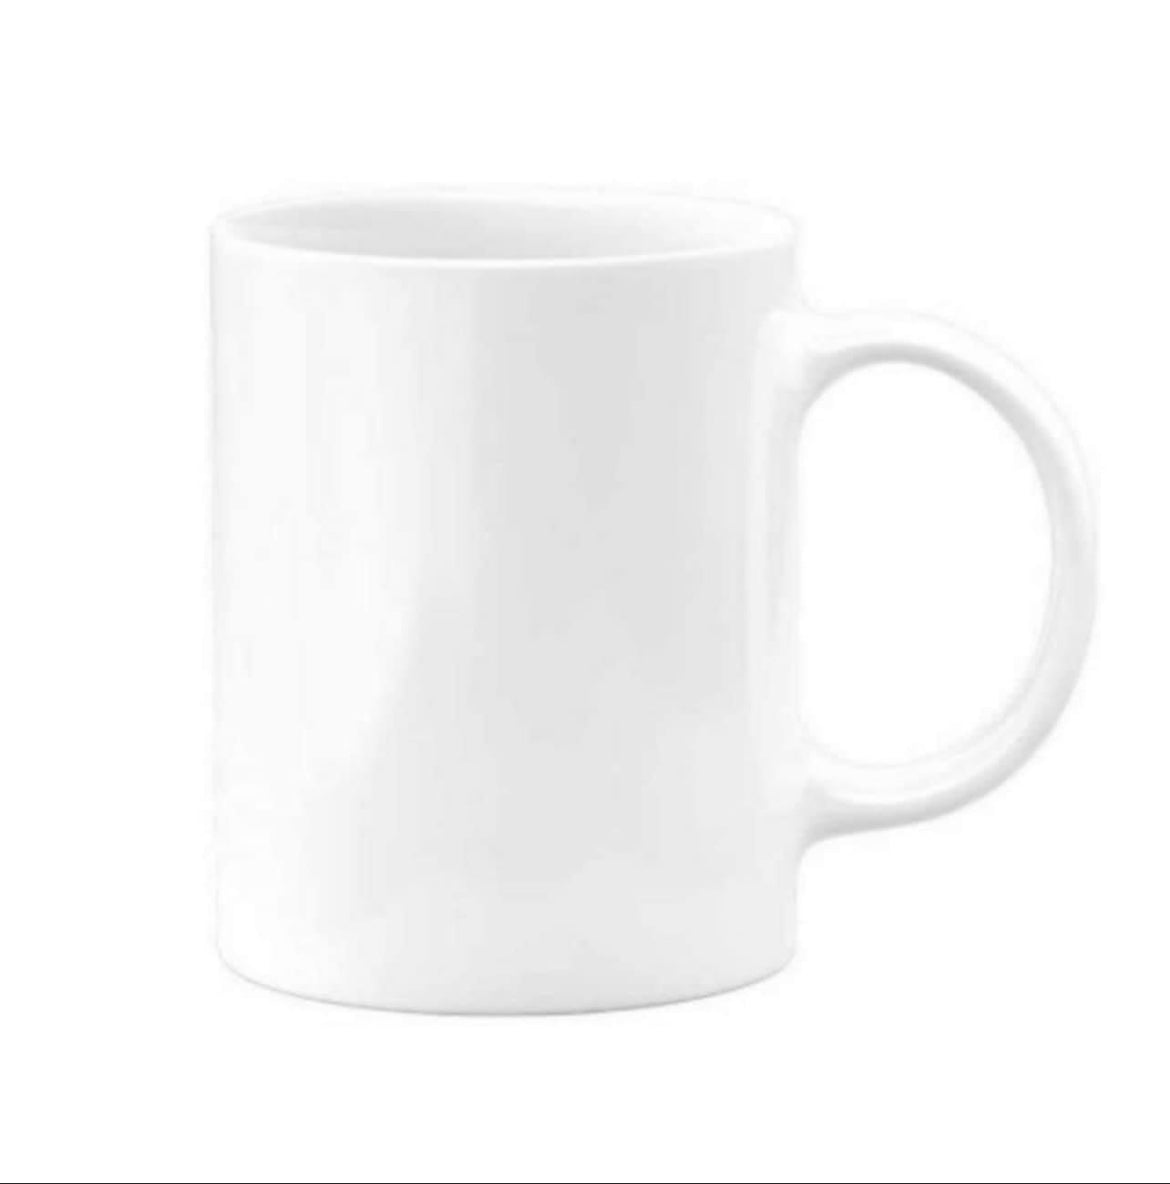 5 Sublimation White Mug,11oz, Coffee Mug Ceramic blank cup Comes with box  NeW